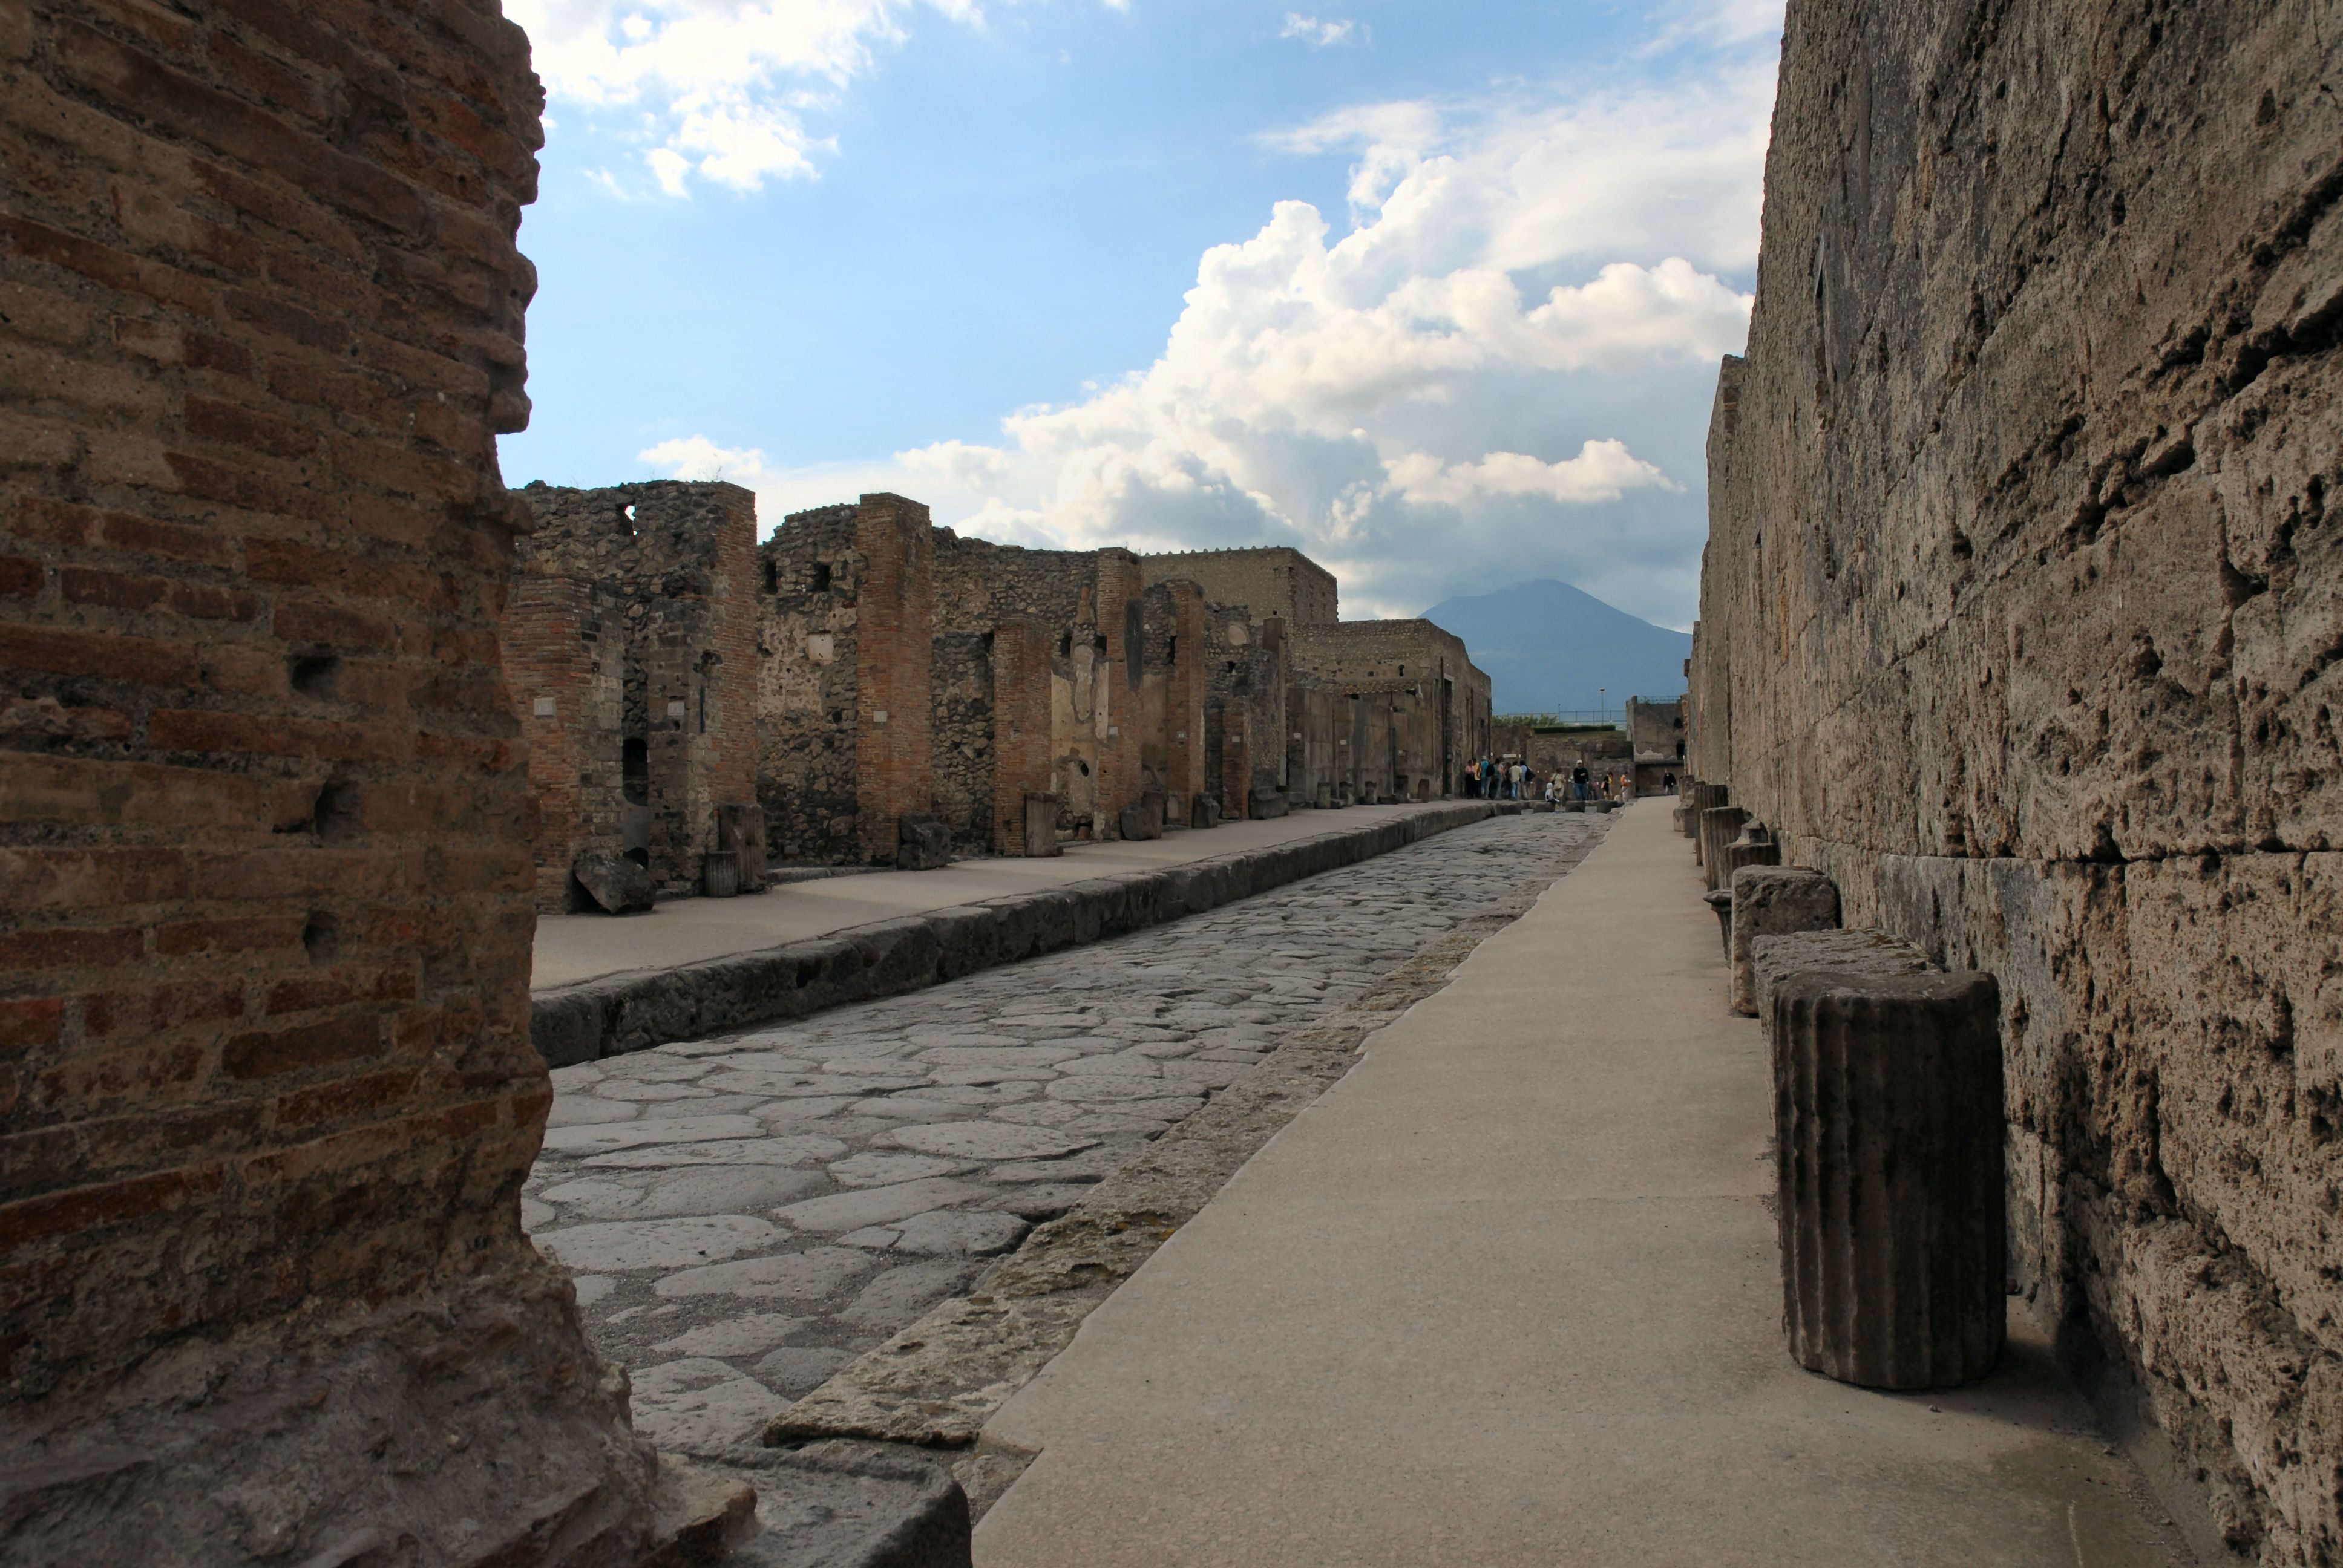 Pretty Image Of Pompeii Italy